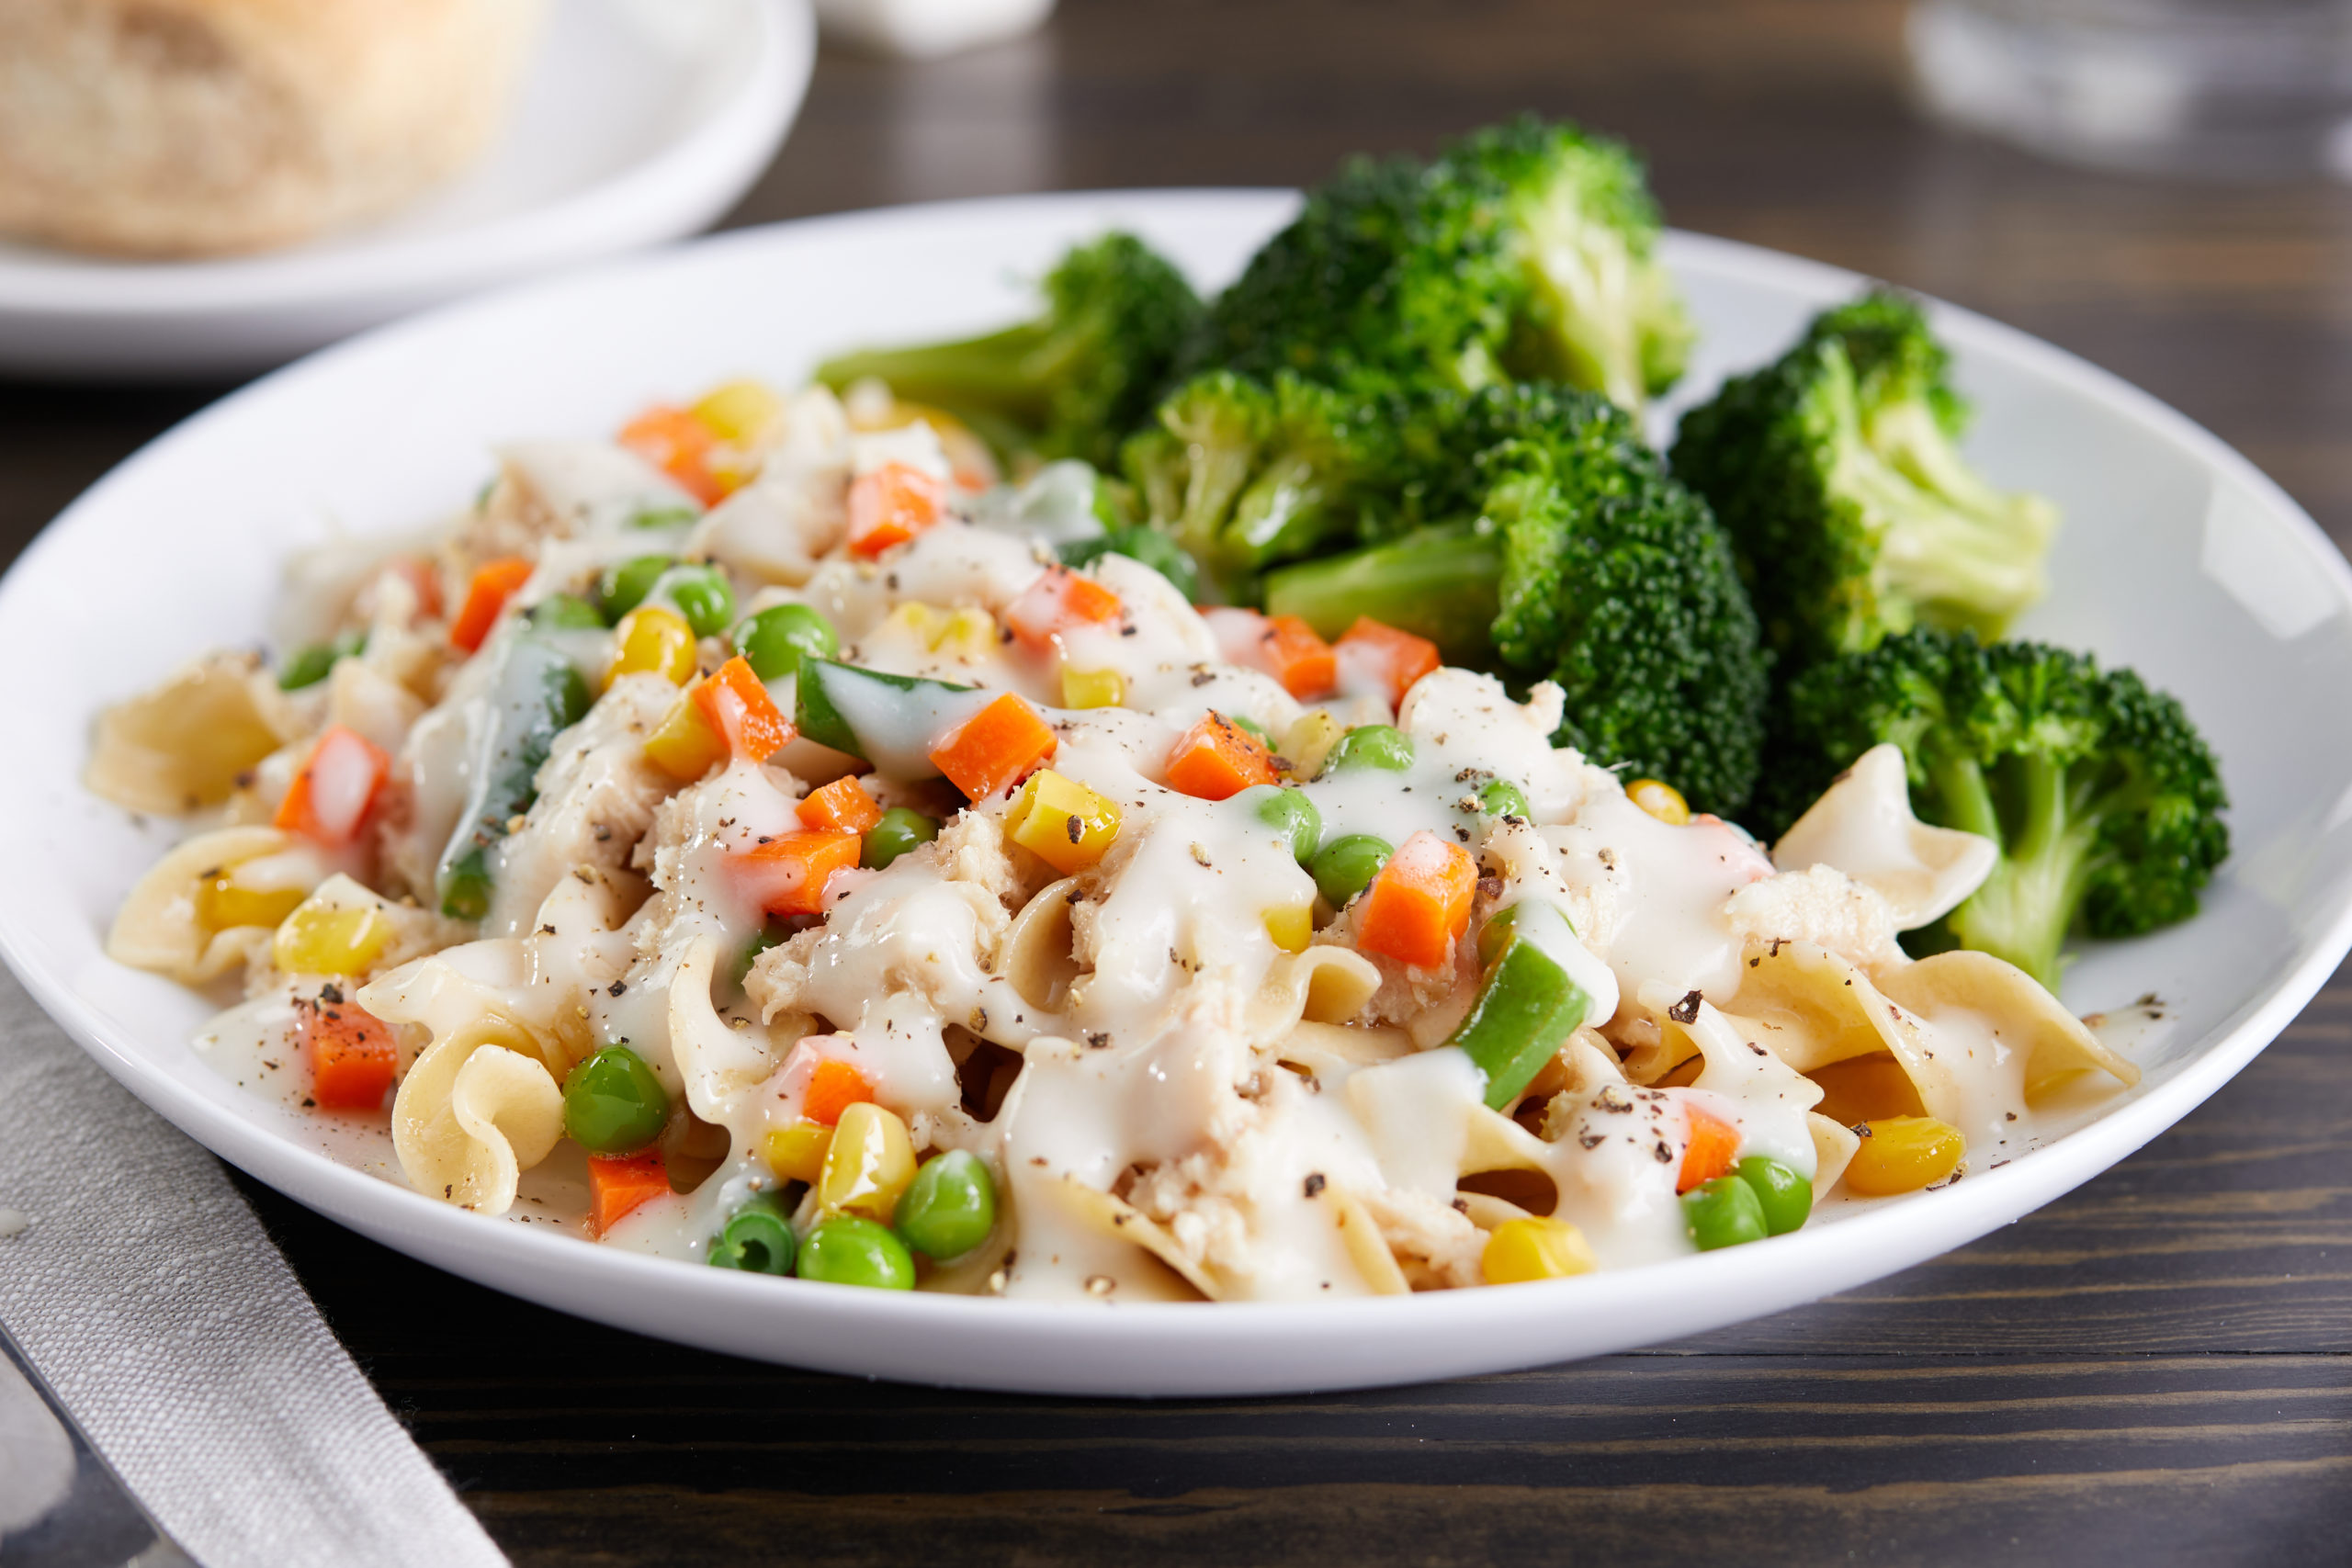 Tuna casserole meal with broccoli